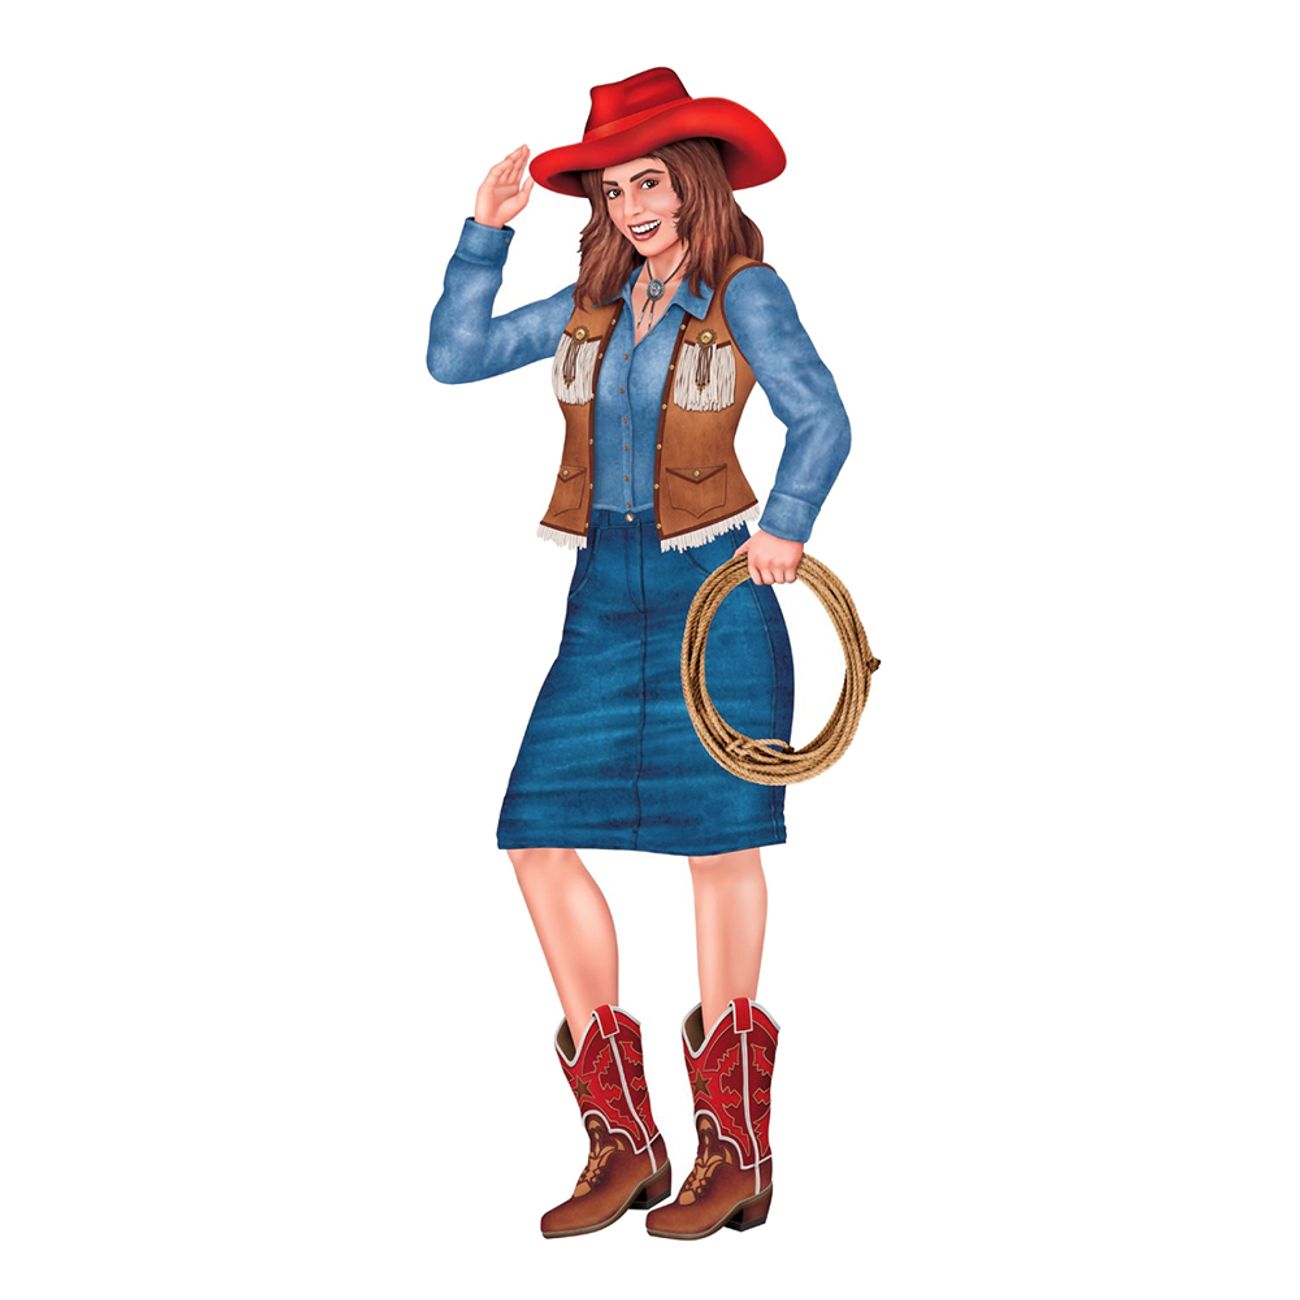 kartongfigur-cowgirl-1